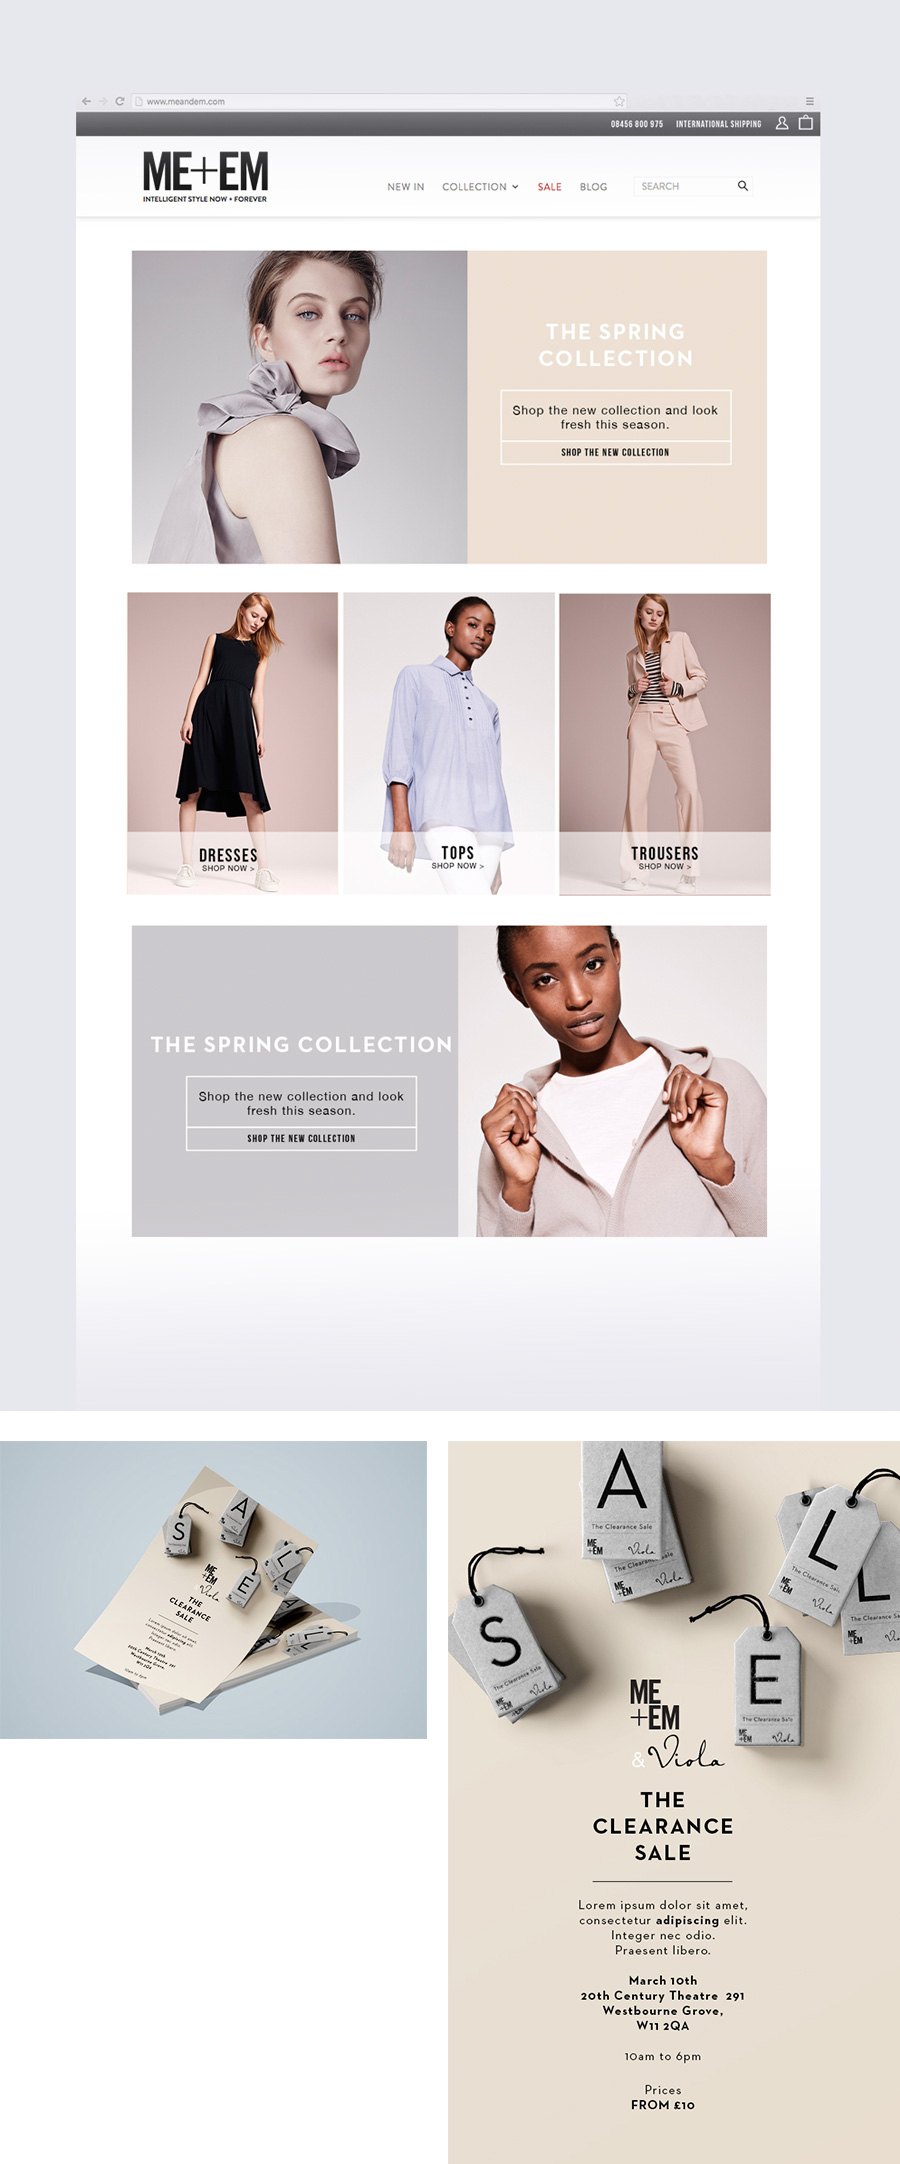 Promotion Email newsletter creative inspiration Website banner design fashion london minimilist fresh simple